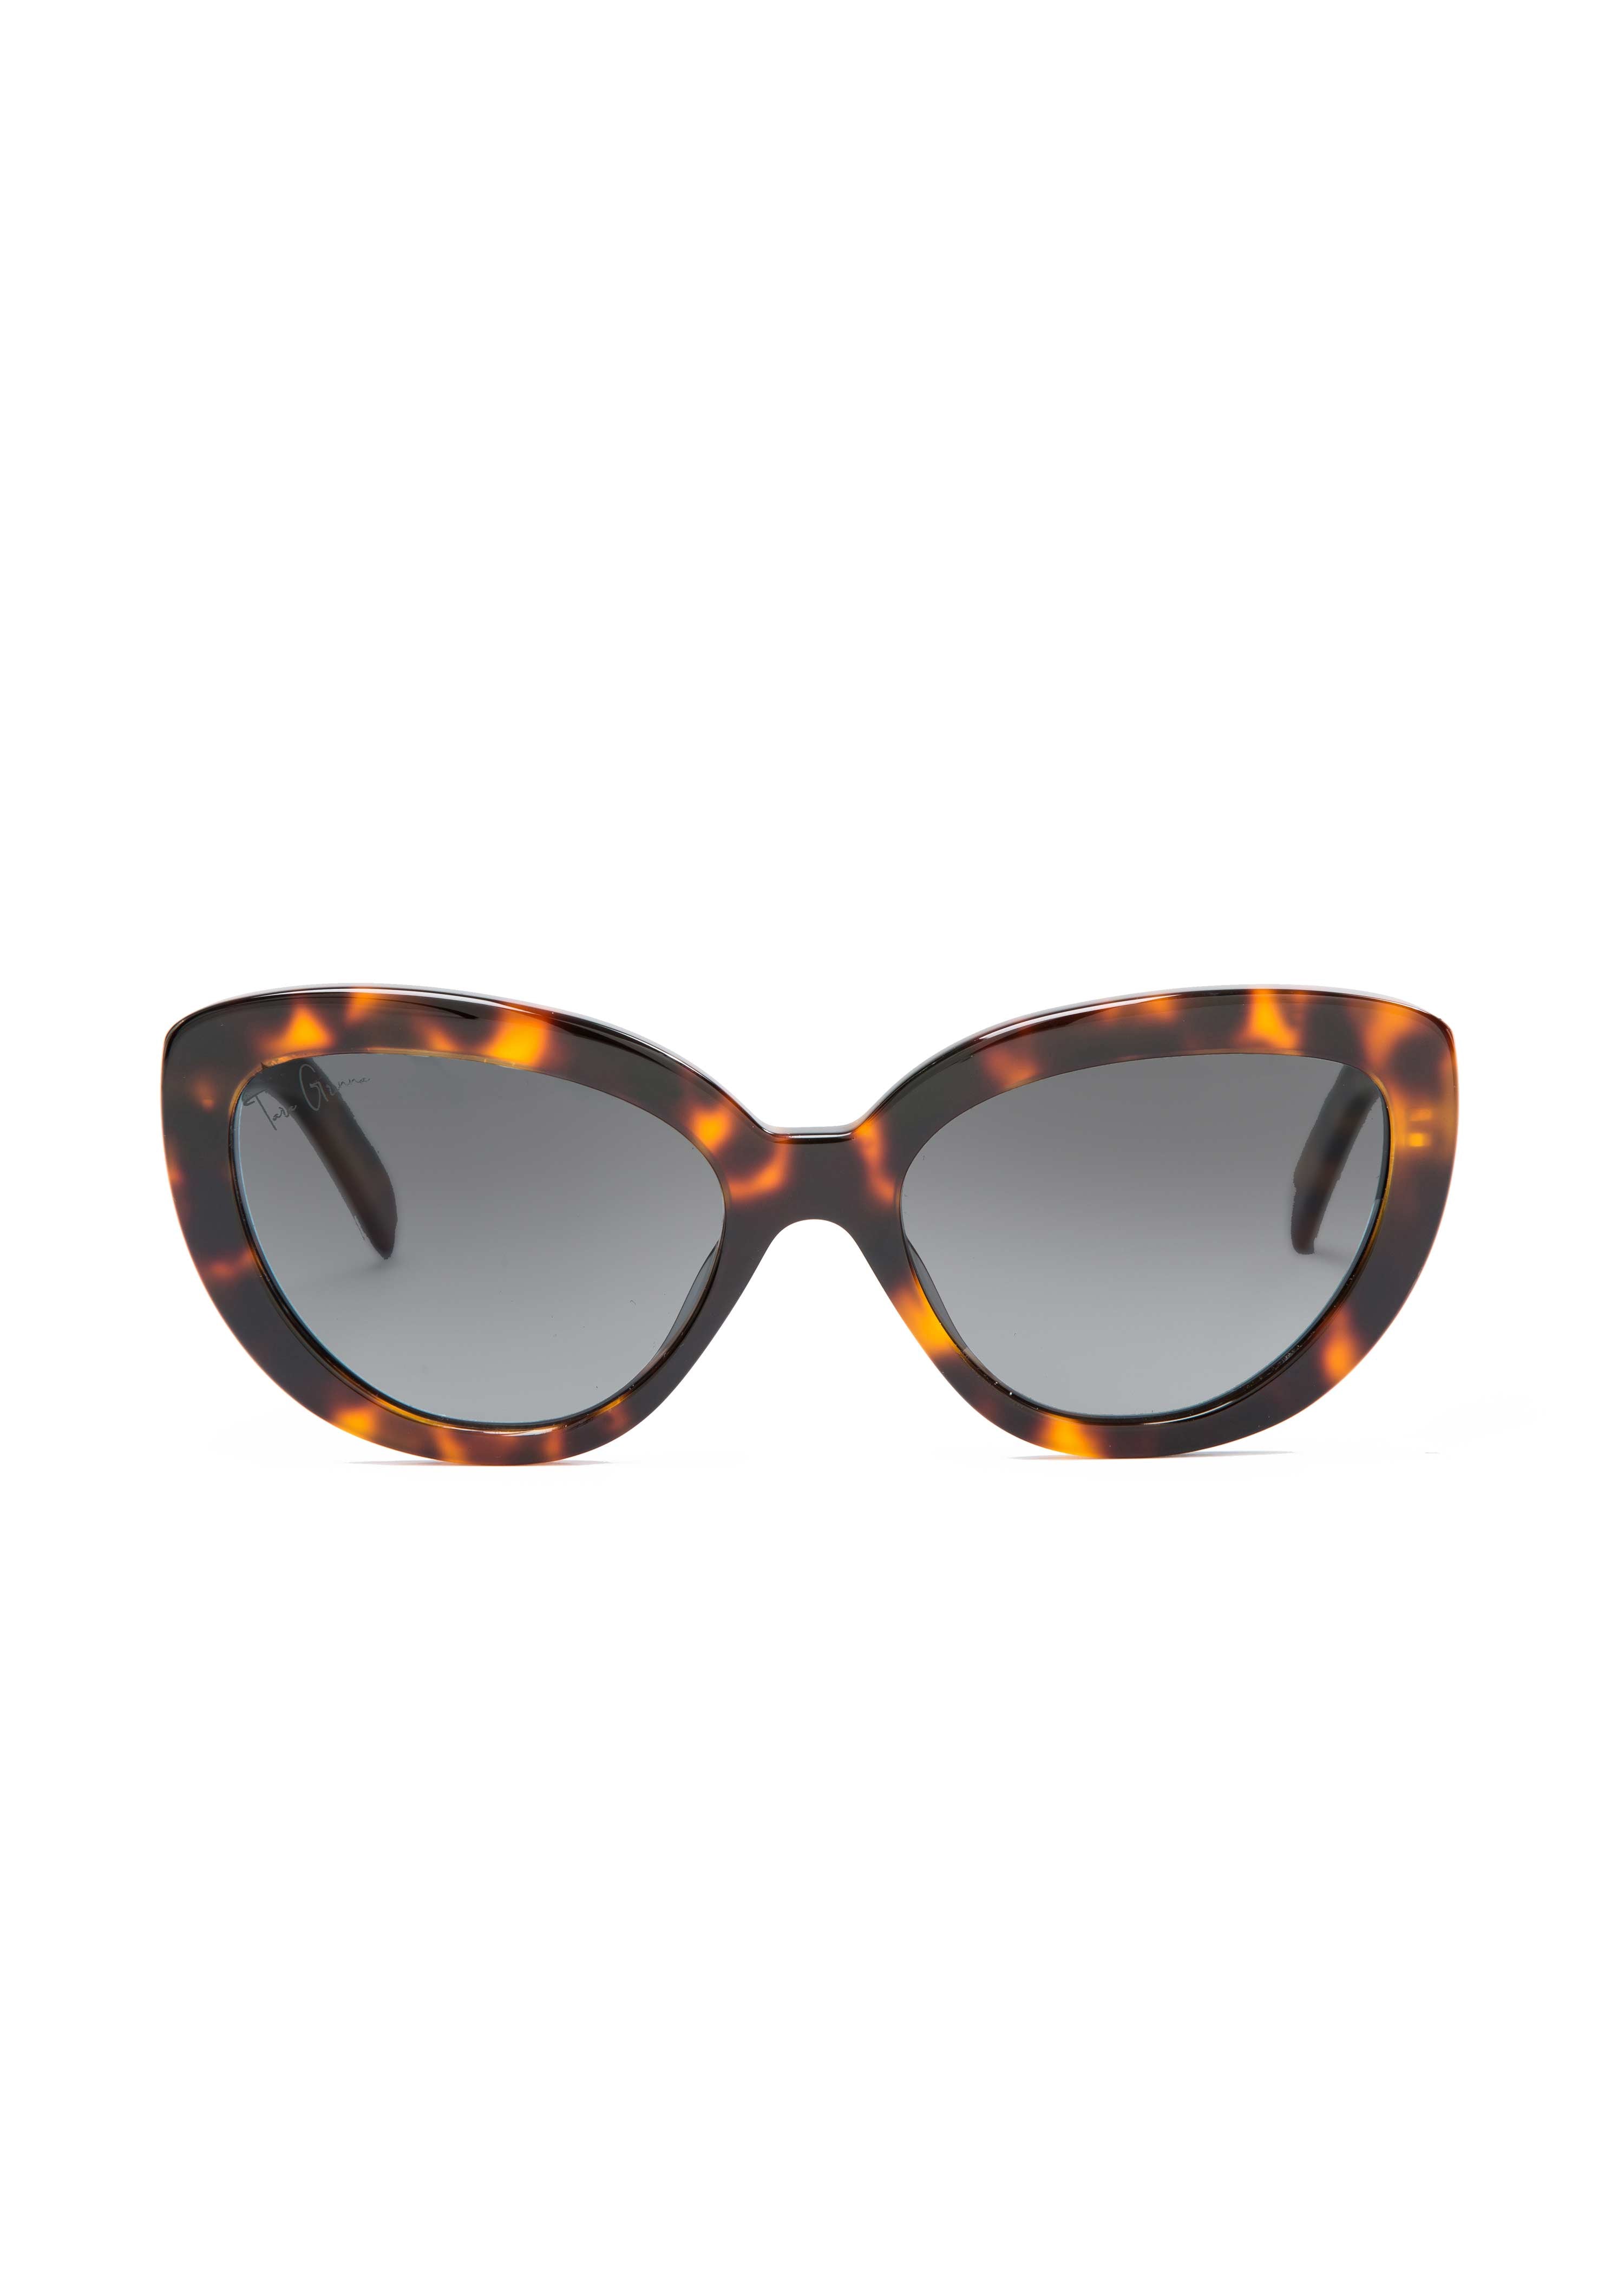 Cateye Polarized Sunglasses (style M1807-Co1)